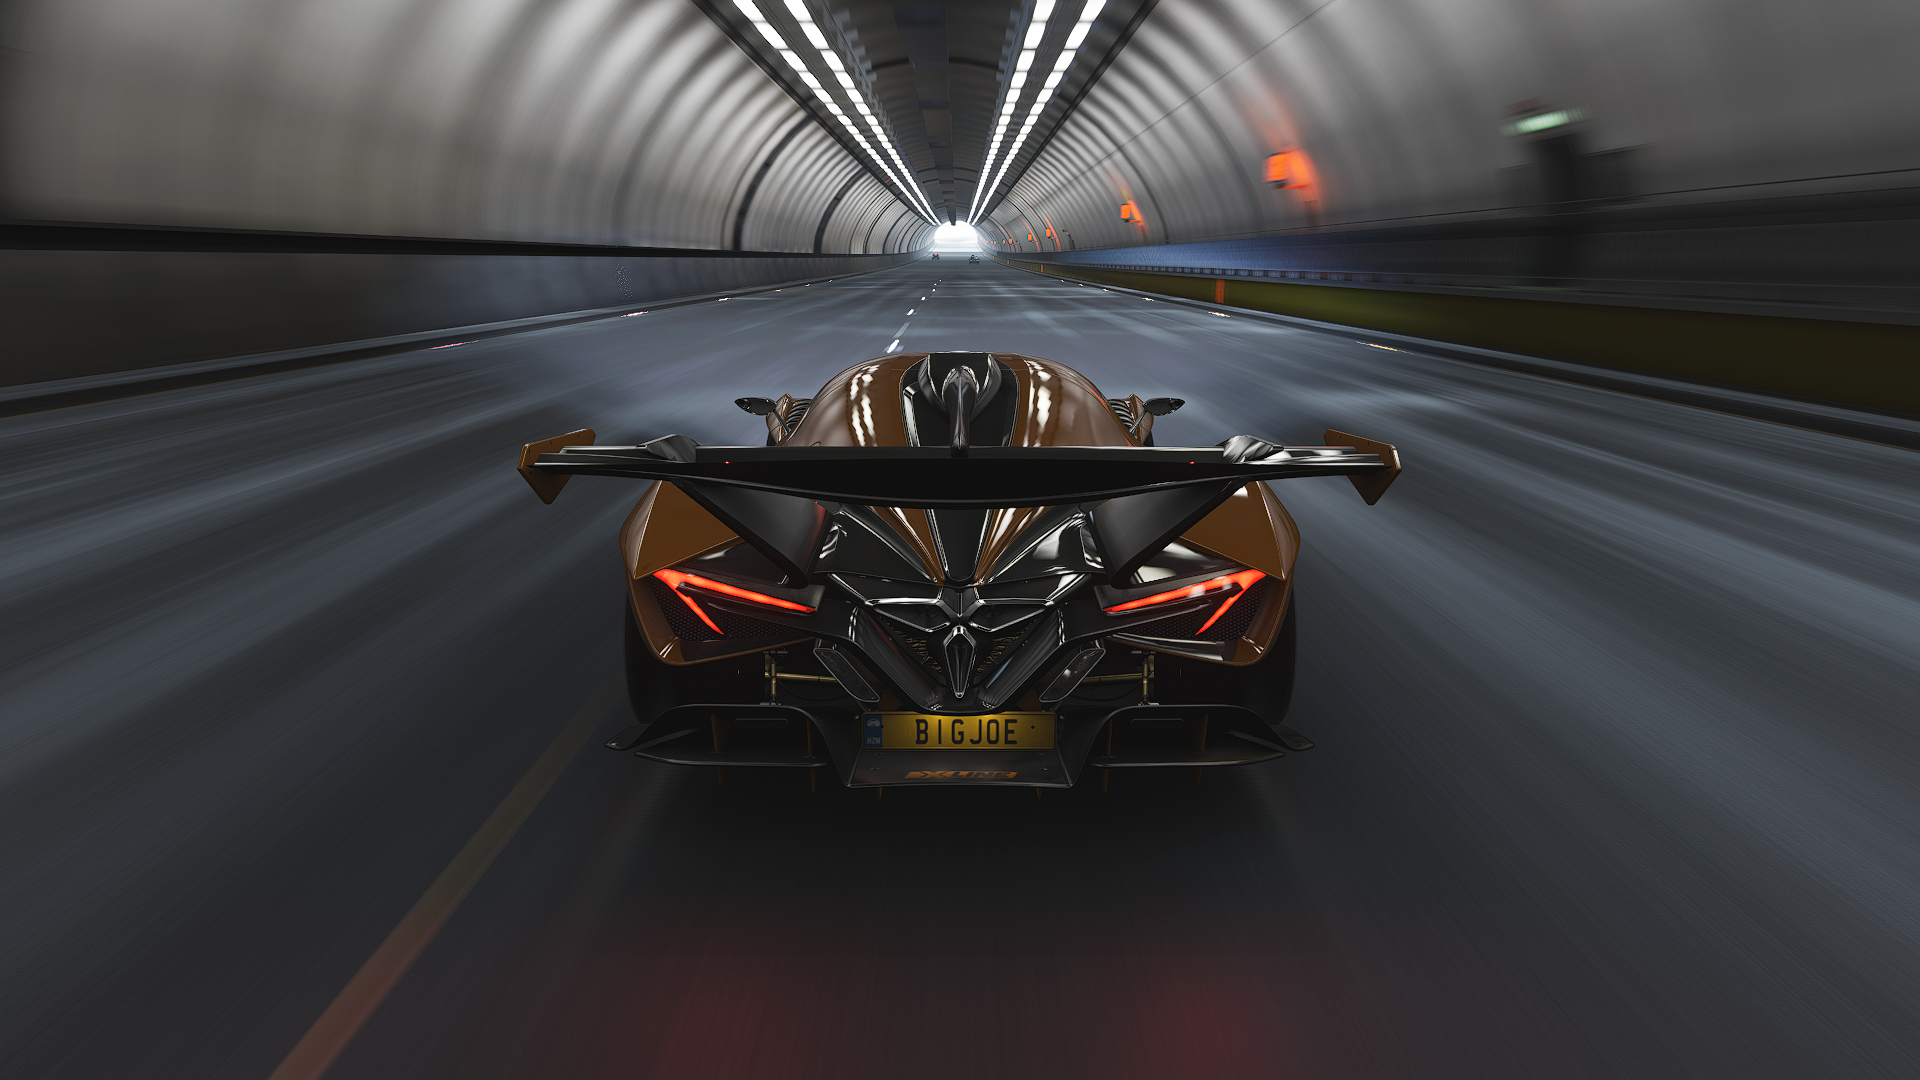 Forza Forza Horizon Forza Horizon 4 Racing Car CGi Apollo IE Video Games Road Blurred Blurry Backgro 1920x1080